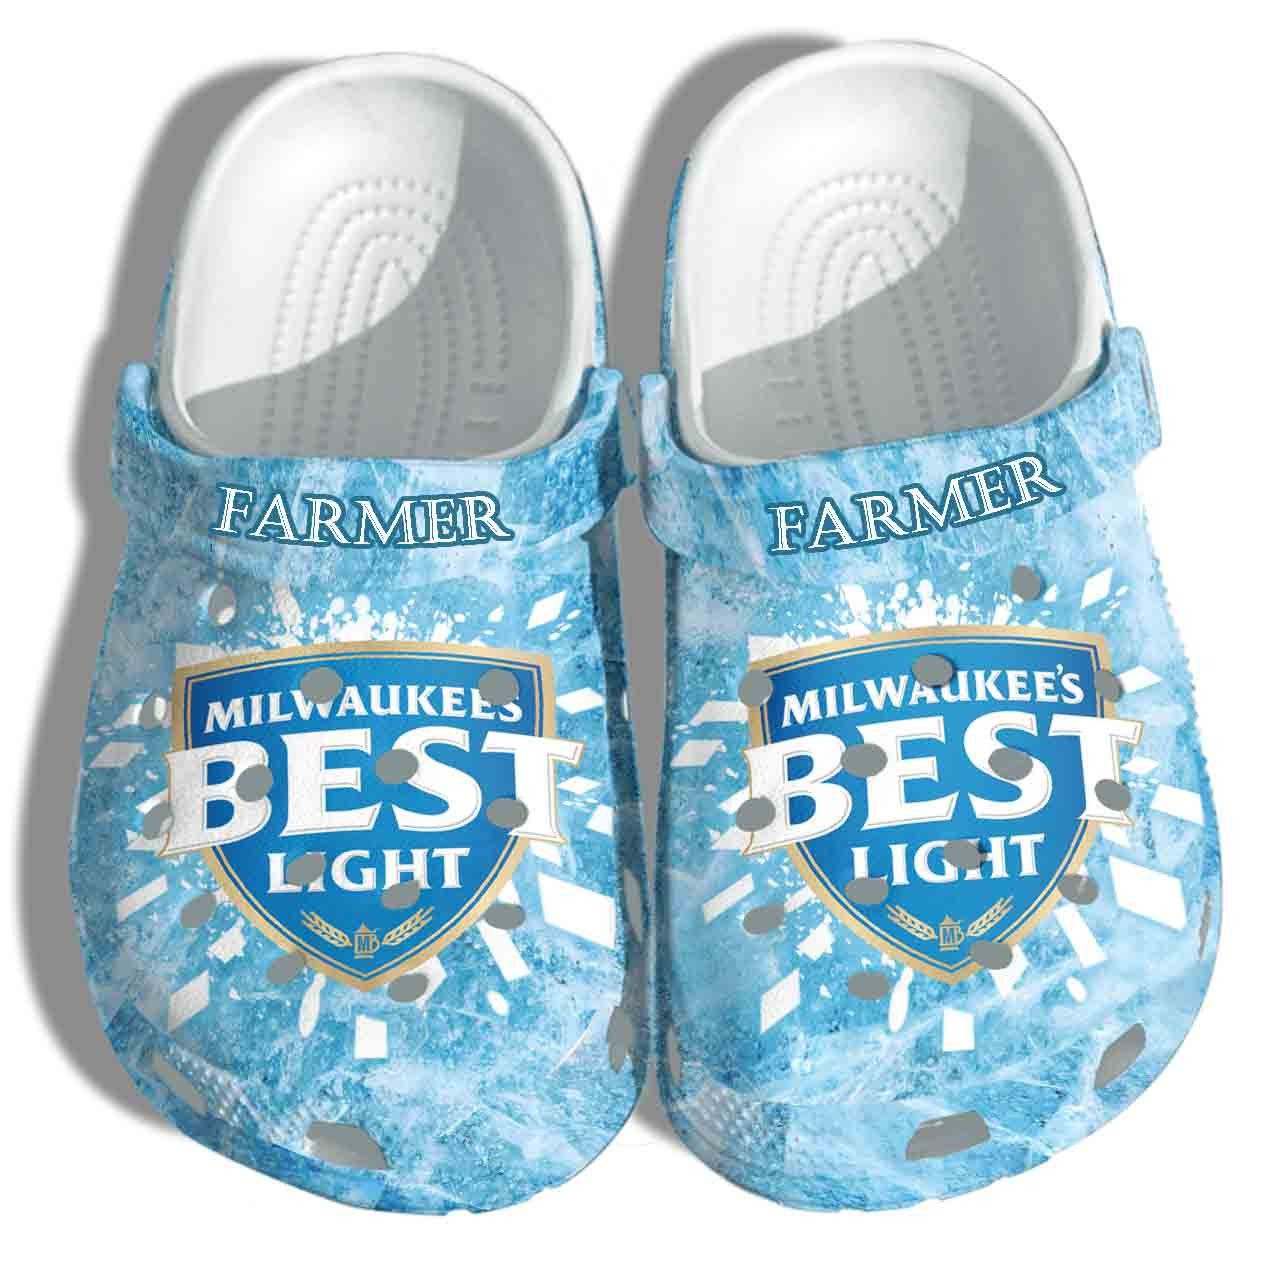 Custom Milwaukees Best Light Crocs Shoes Clogs – Funny Beer Crocs Shoes Clogs For Men Women